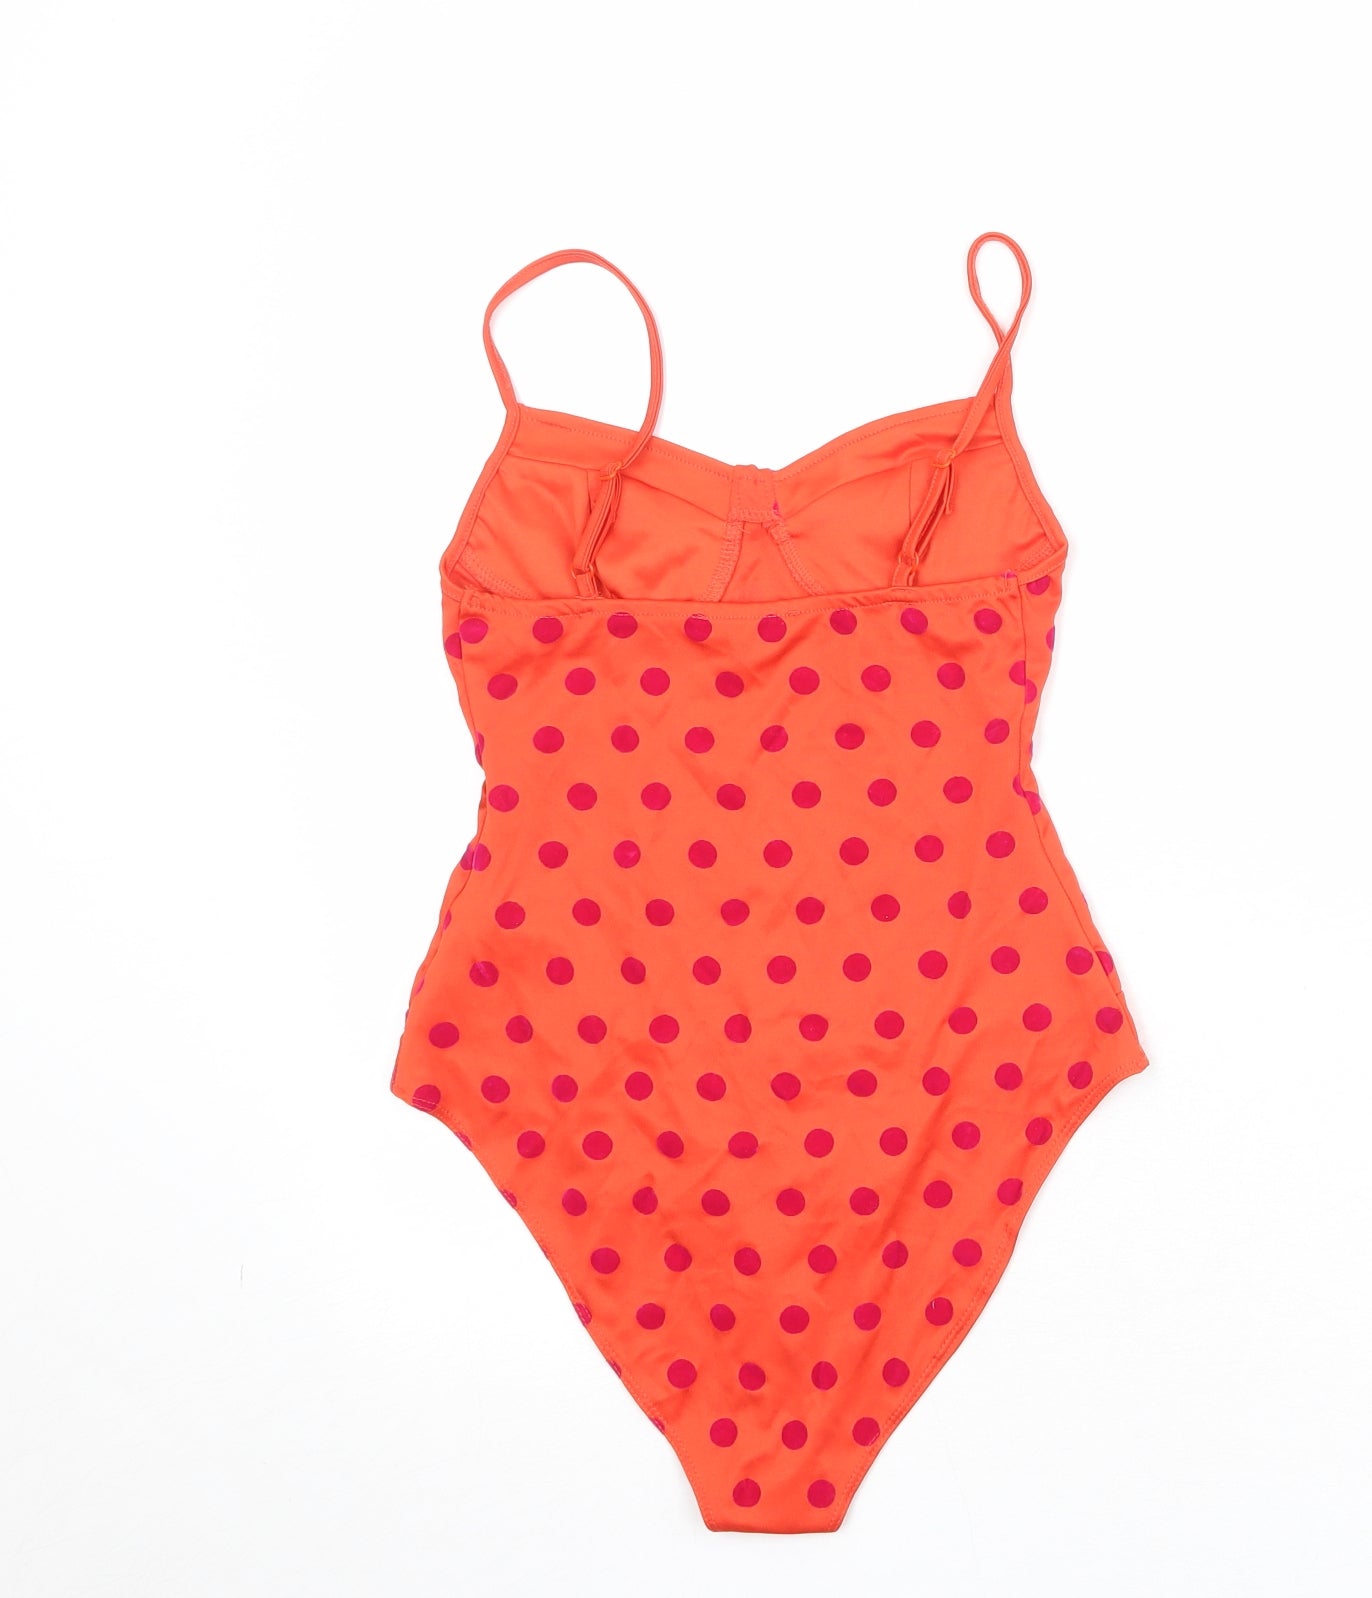 Zara Womens Orange Polka Dot Polyester Bodysuit One-Piece Size S Snap